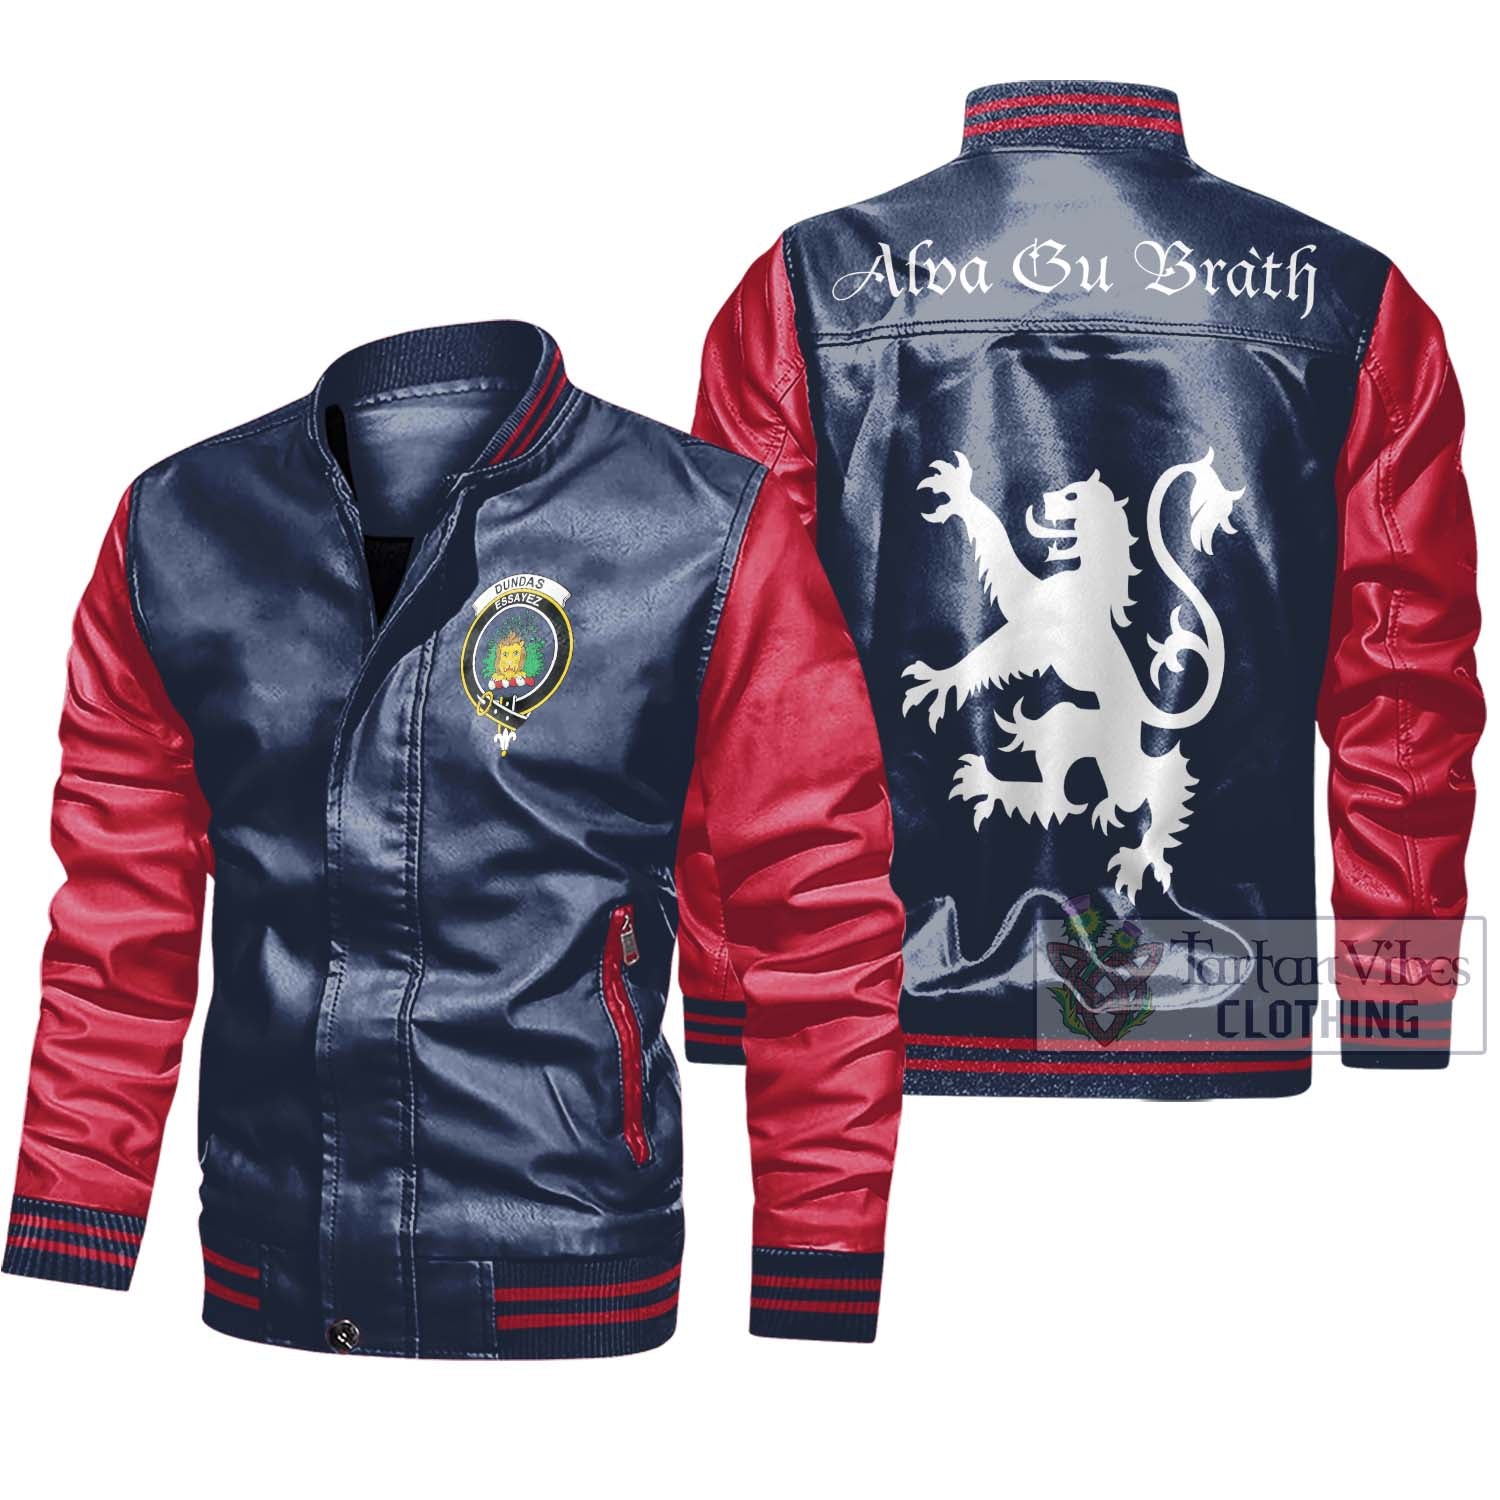 Tartan Vibes Clothing Dundas Family Crest Leather Bomber Jacket Lion Rampant Alba Gu Brath Style